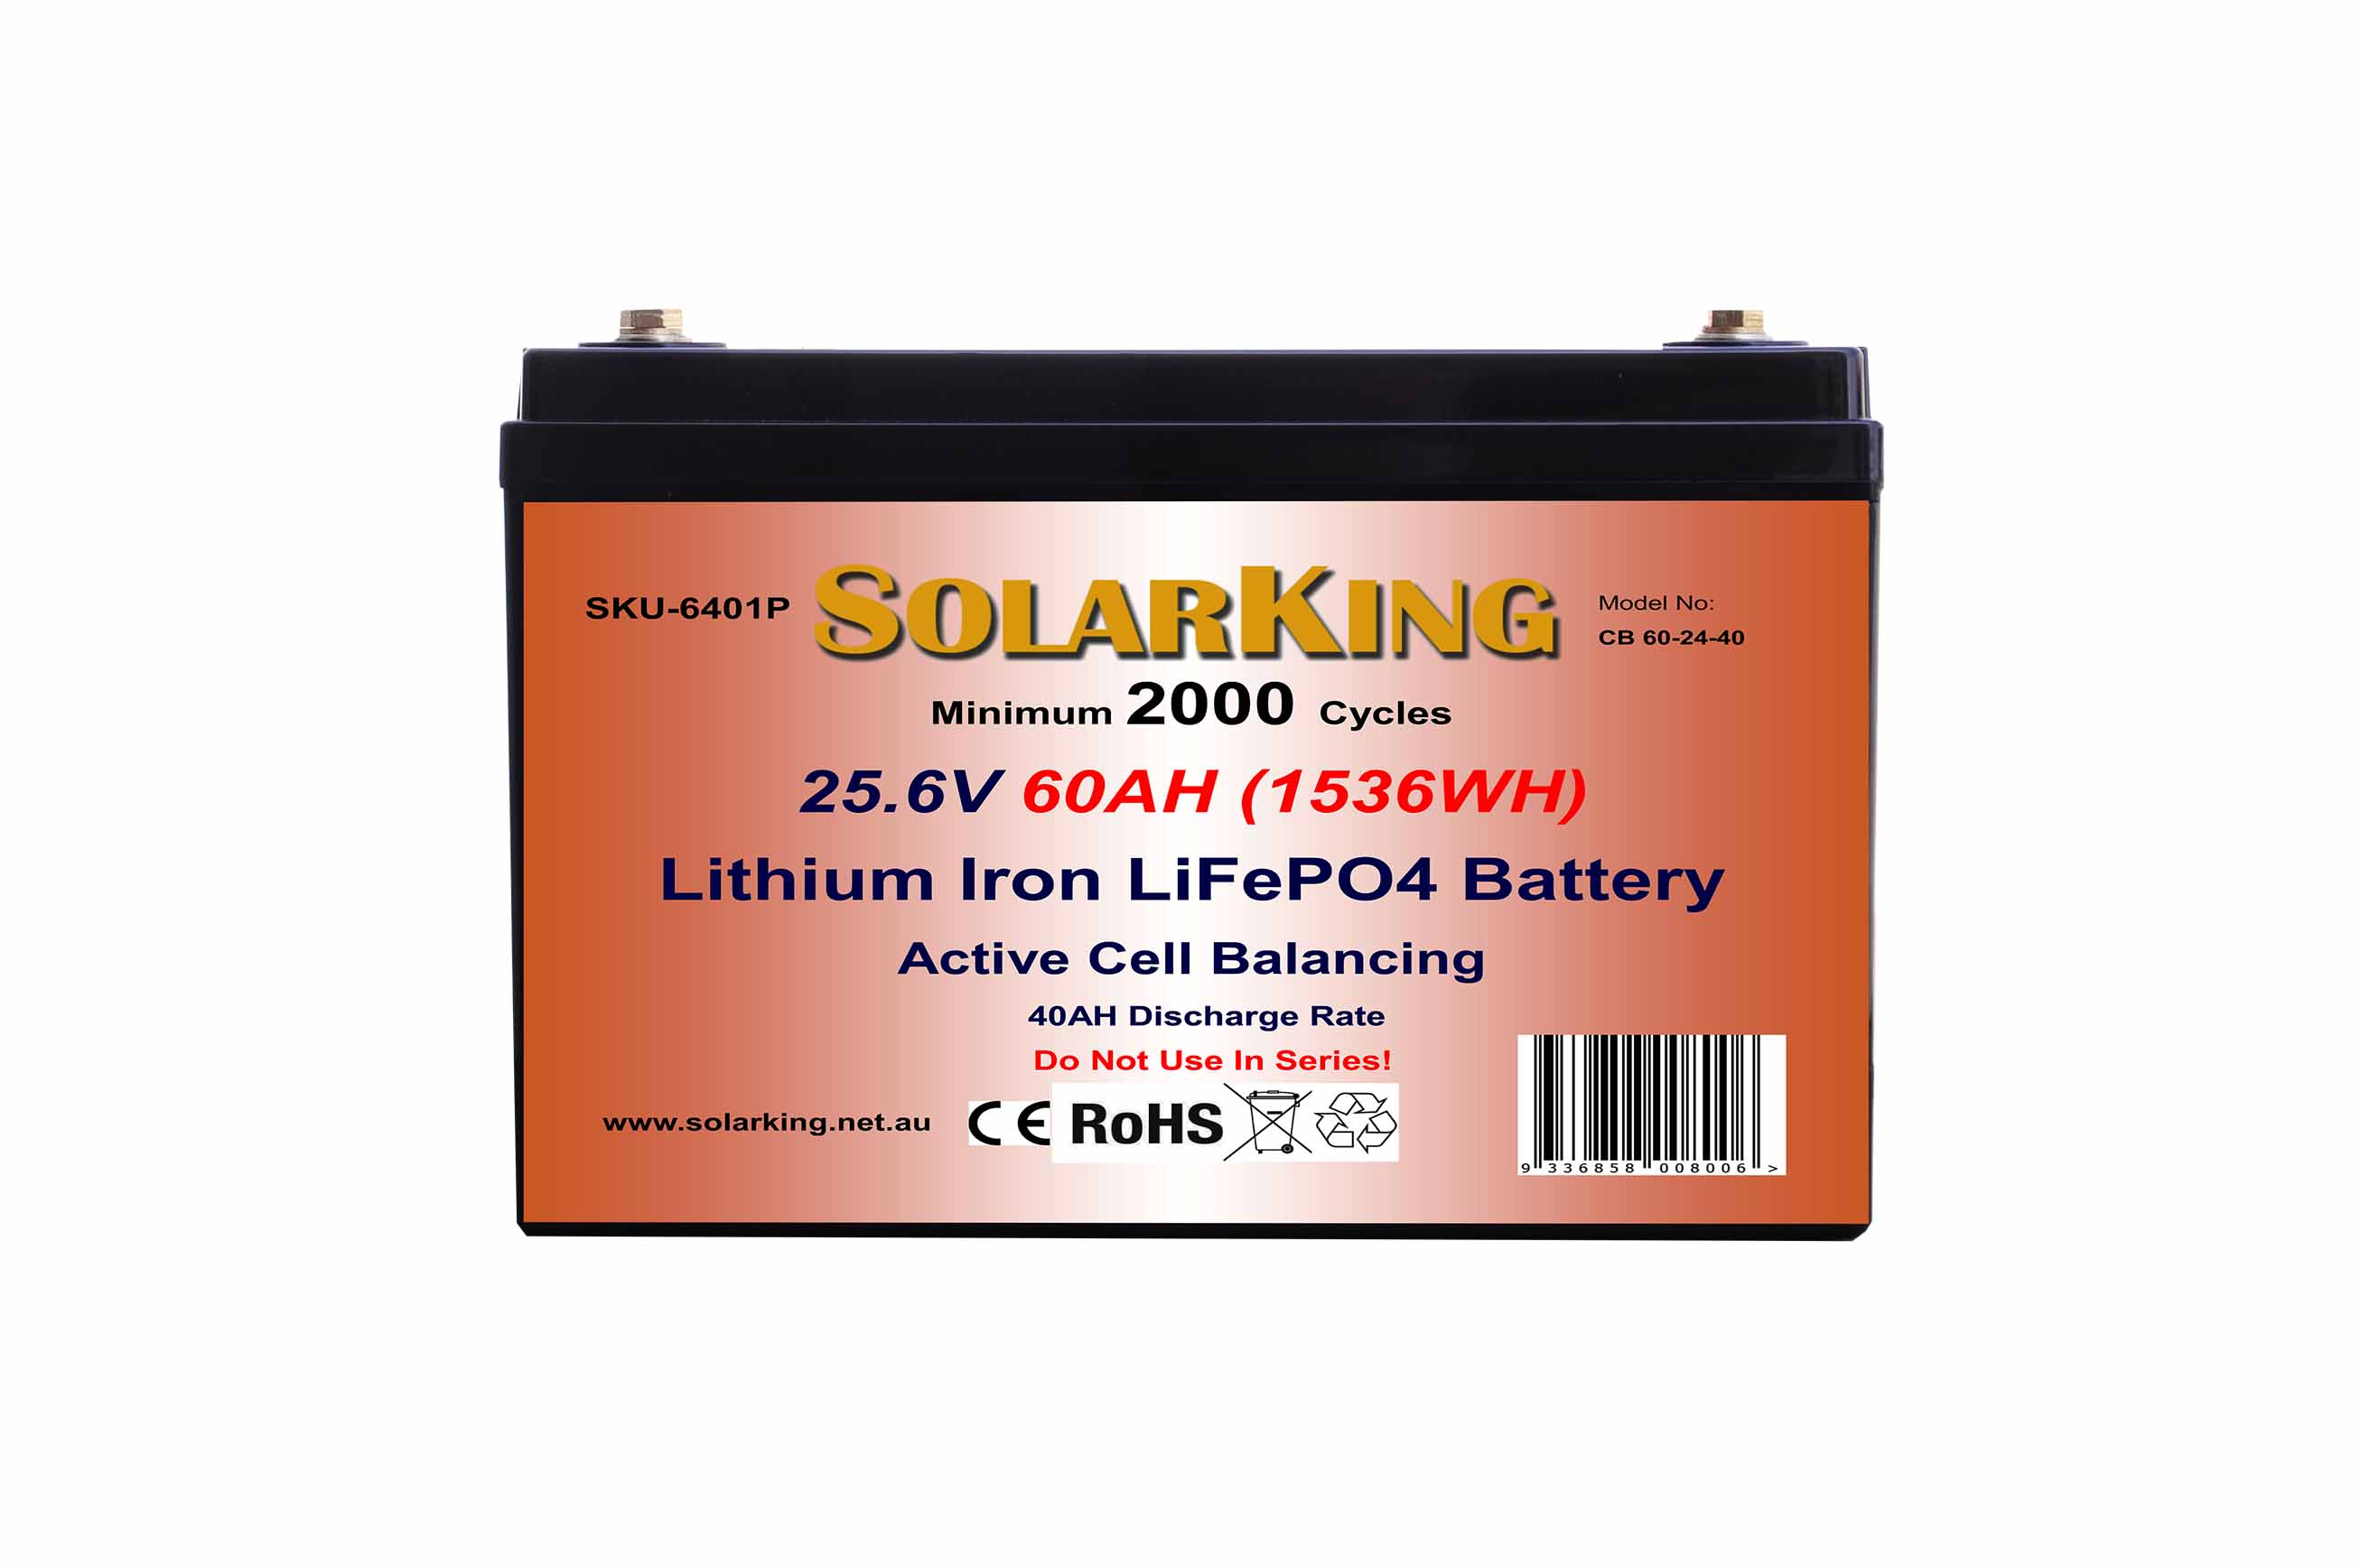 25.6V 60AH Solarking Lithium Iron Battery Plastic Case  CB-60-24-40